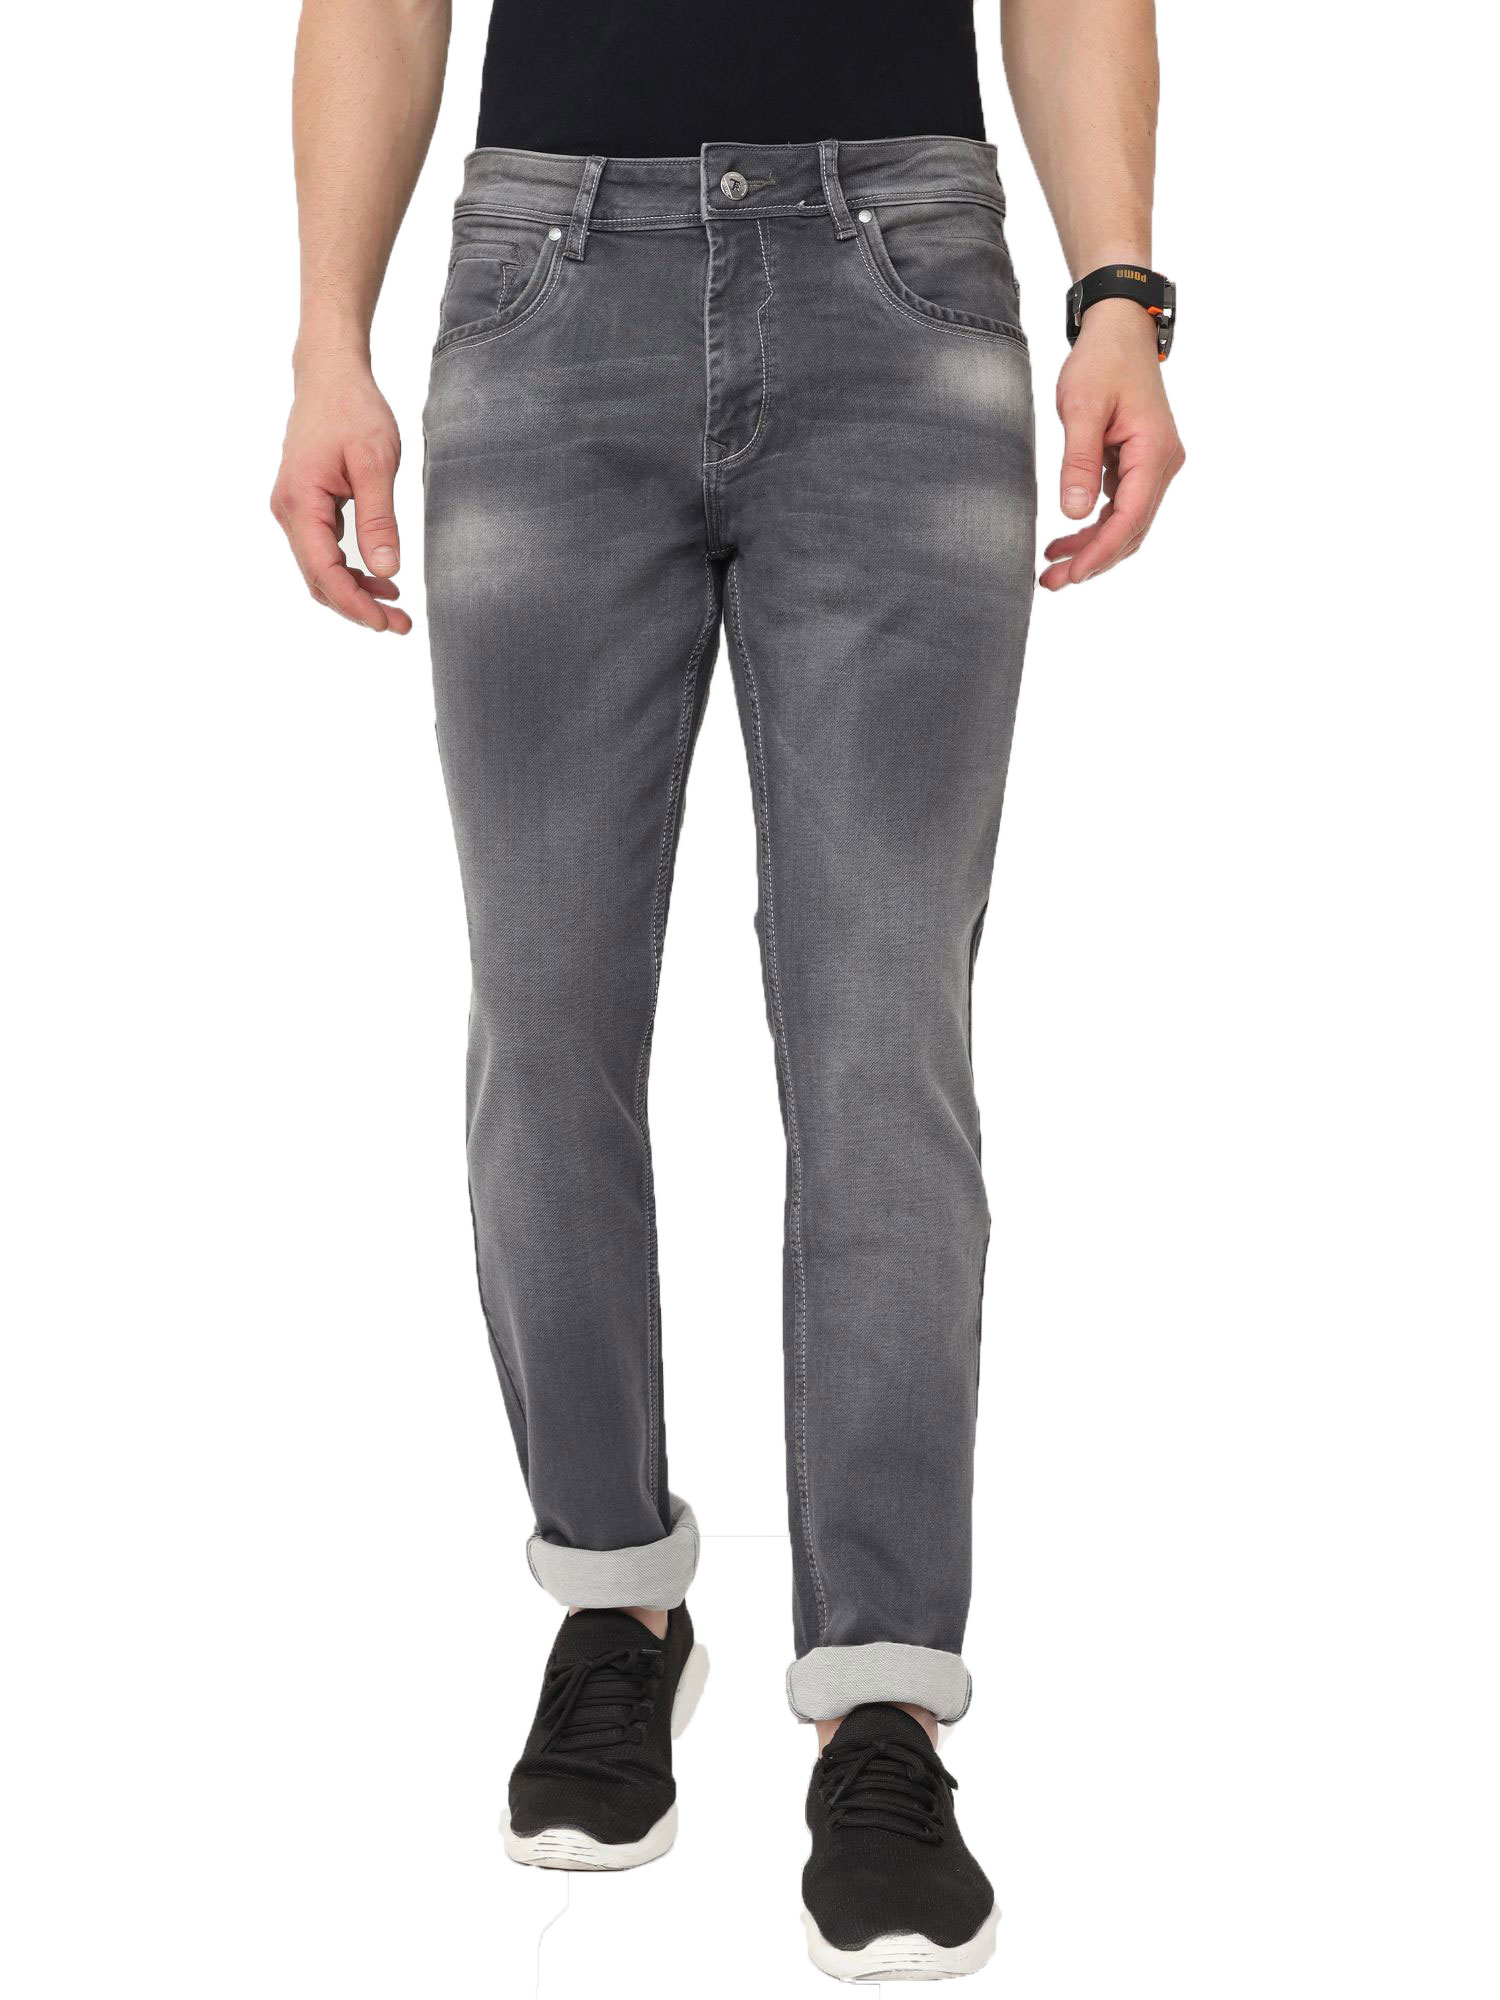 Men’s Slim Fit Jeans – Grey